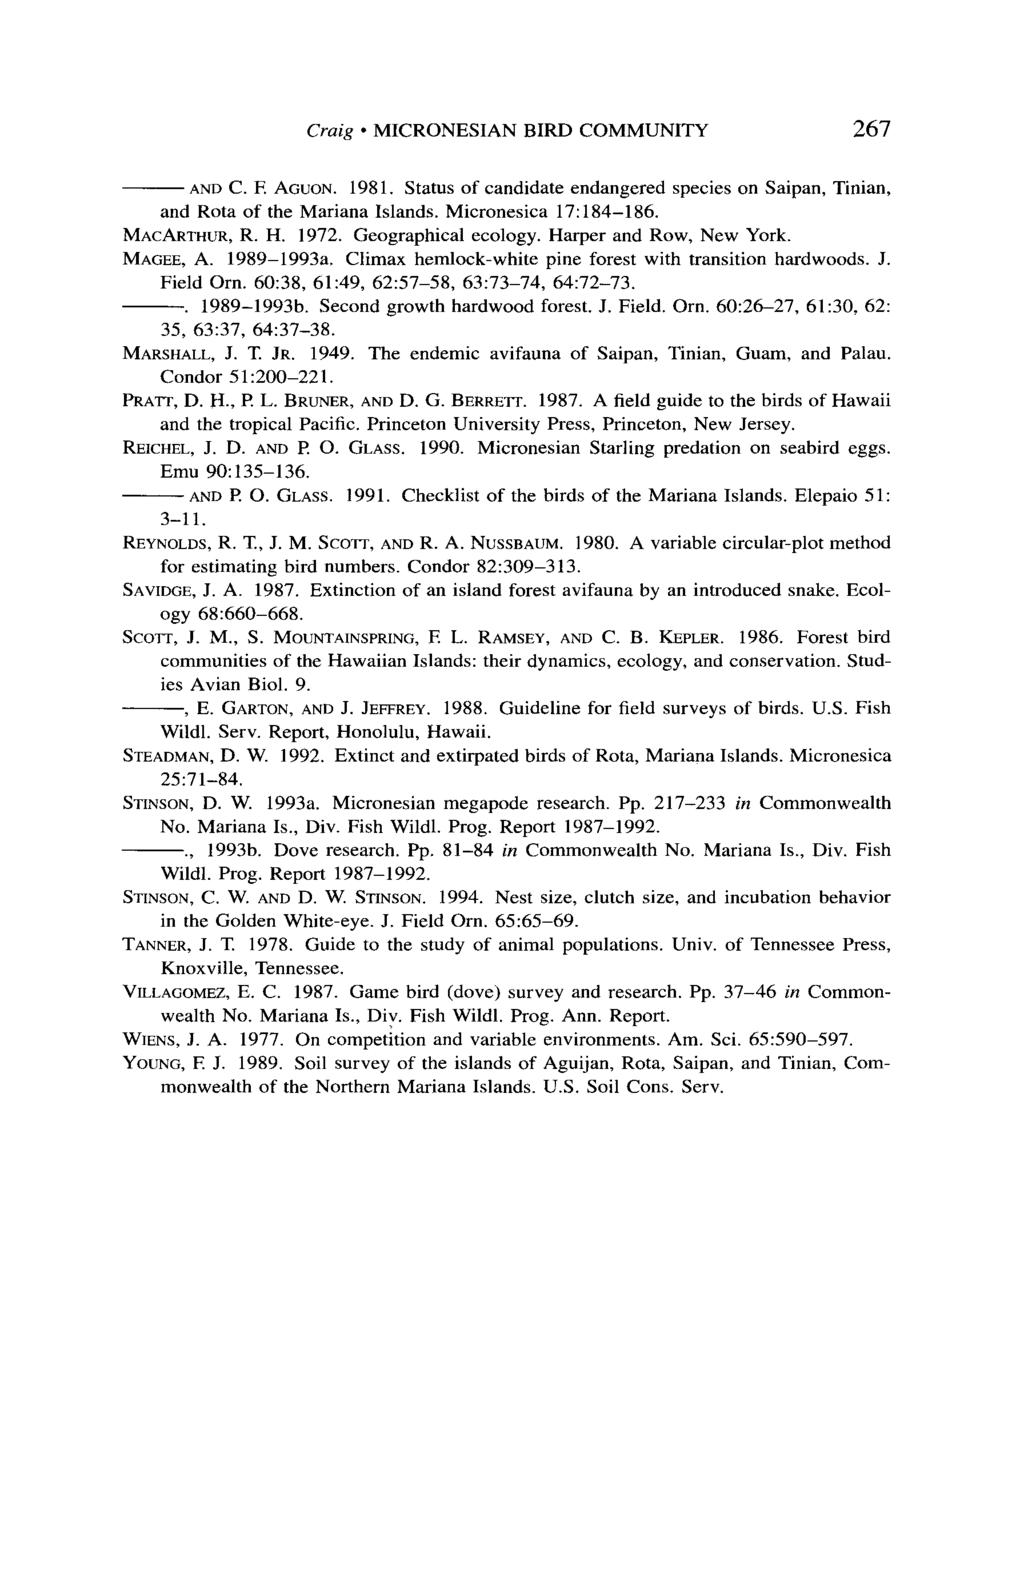 Craig l MICRONESIAN BIRD COMMUNITY 267 AND C. E AGUON. 1981. Status of candidate endangered species on Saipan, Tinian, and Rota of the Mariana Islands. Micronesica 17: 184-186. MACARTHUR, R. H. 1972.